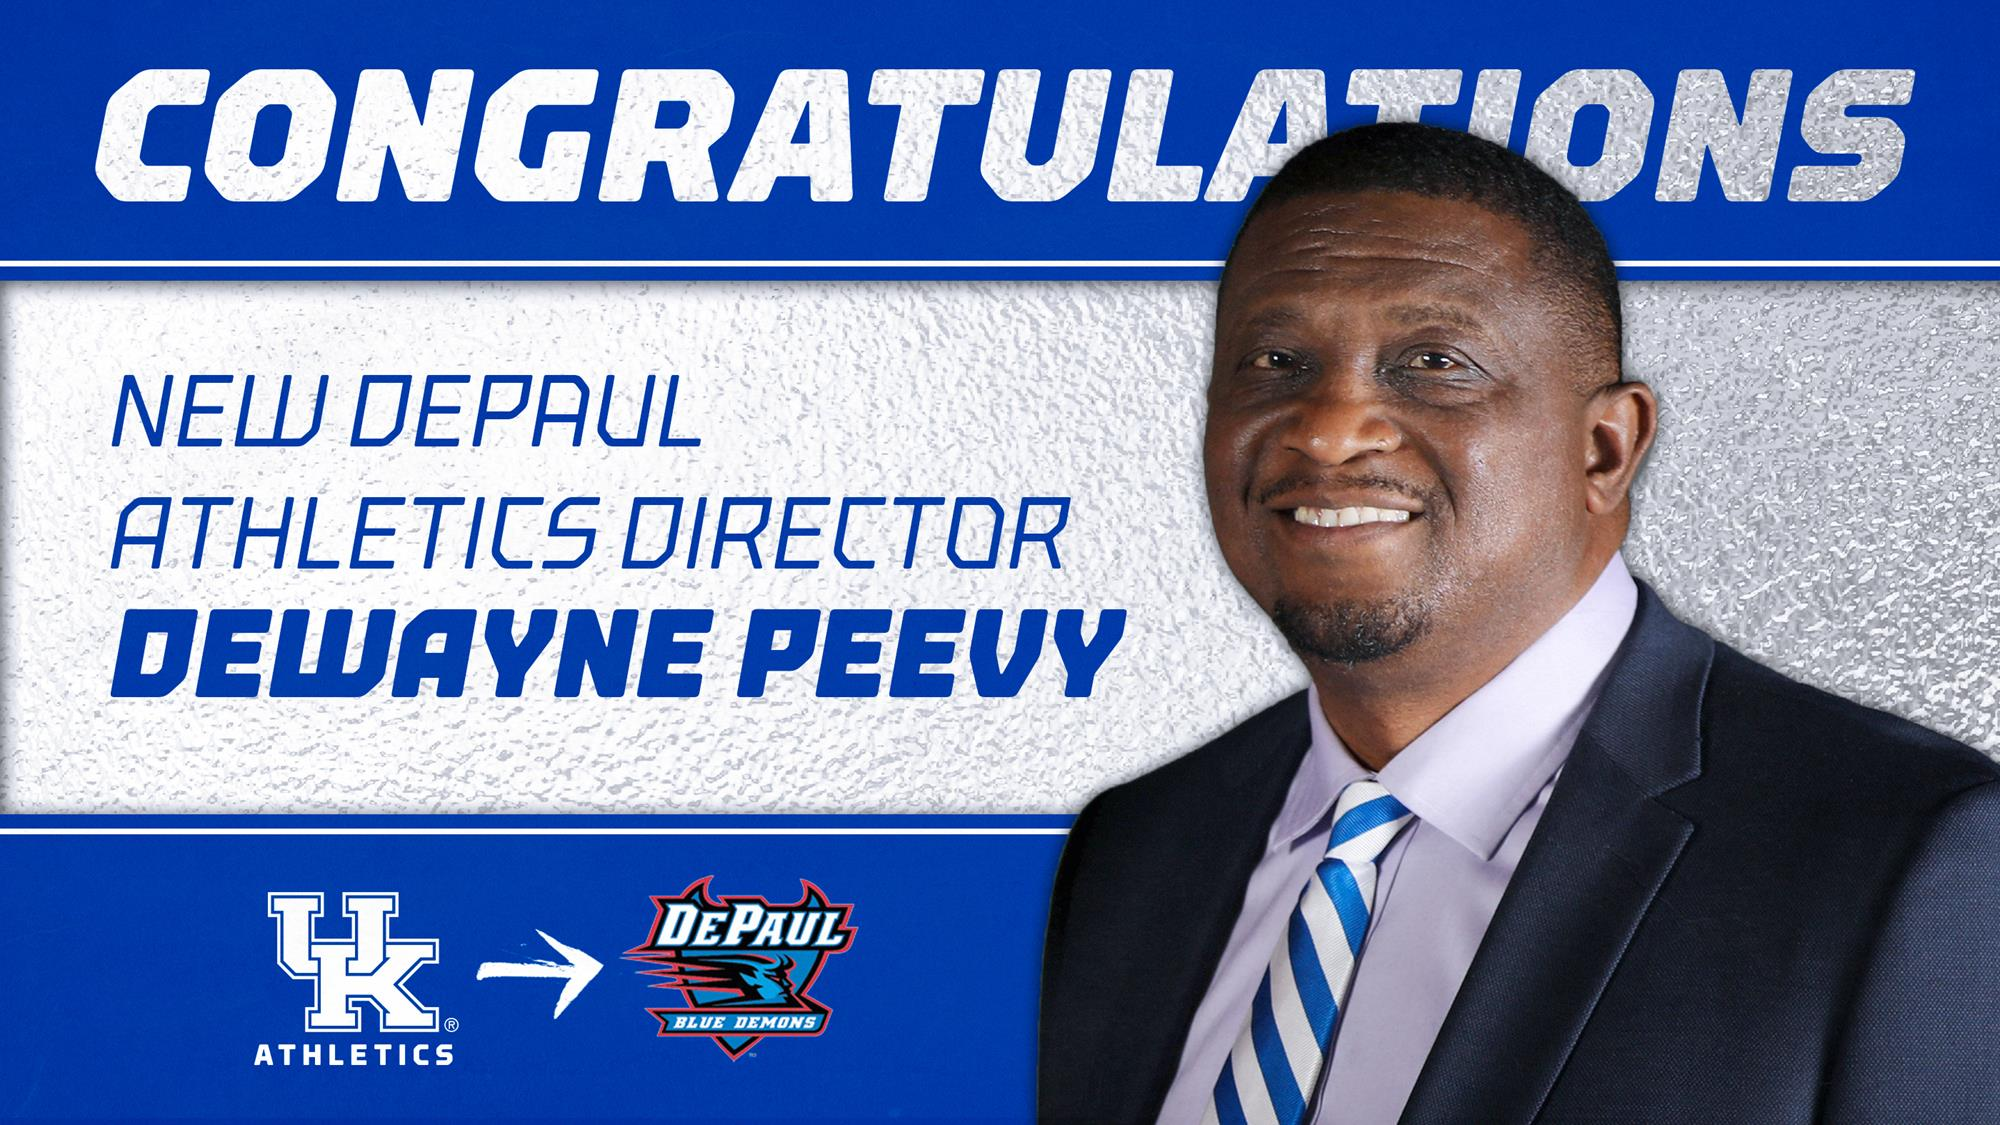 Kentucky’s Peevy Named Director of Athletics at DePaul